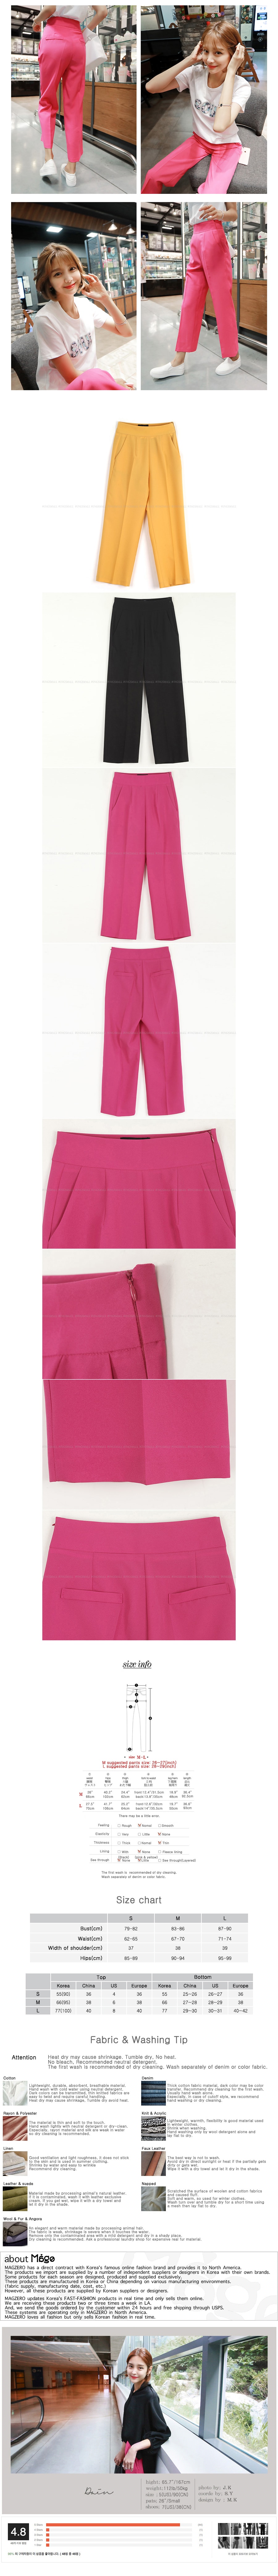 KOREA High Waist Career Suit Pants #Hot Pink L(28-29) [Free Shipping]